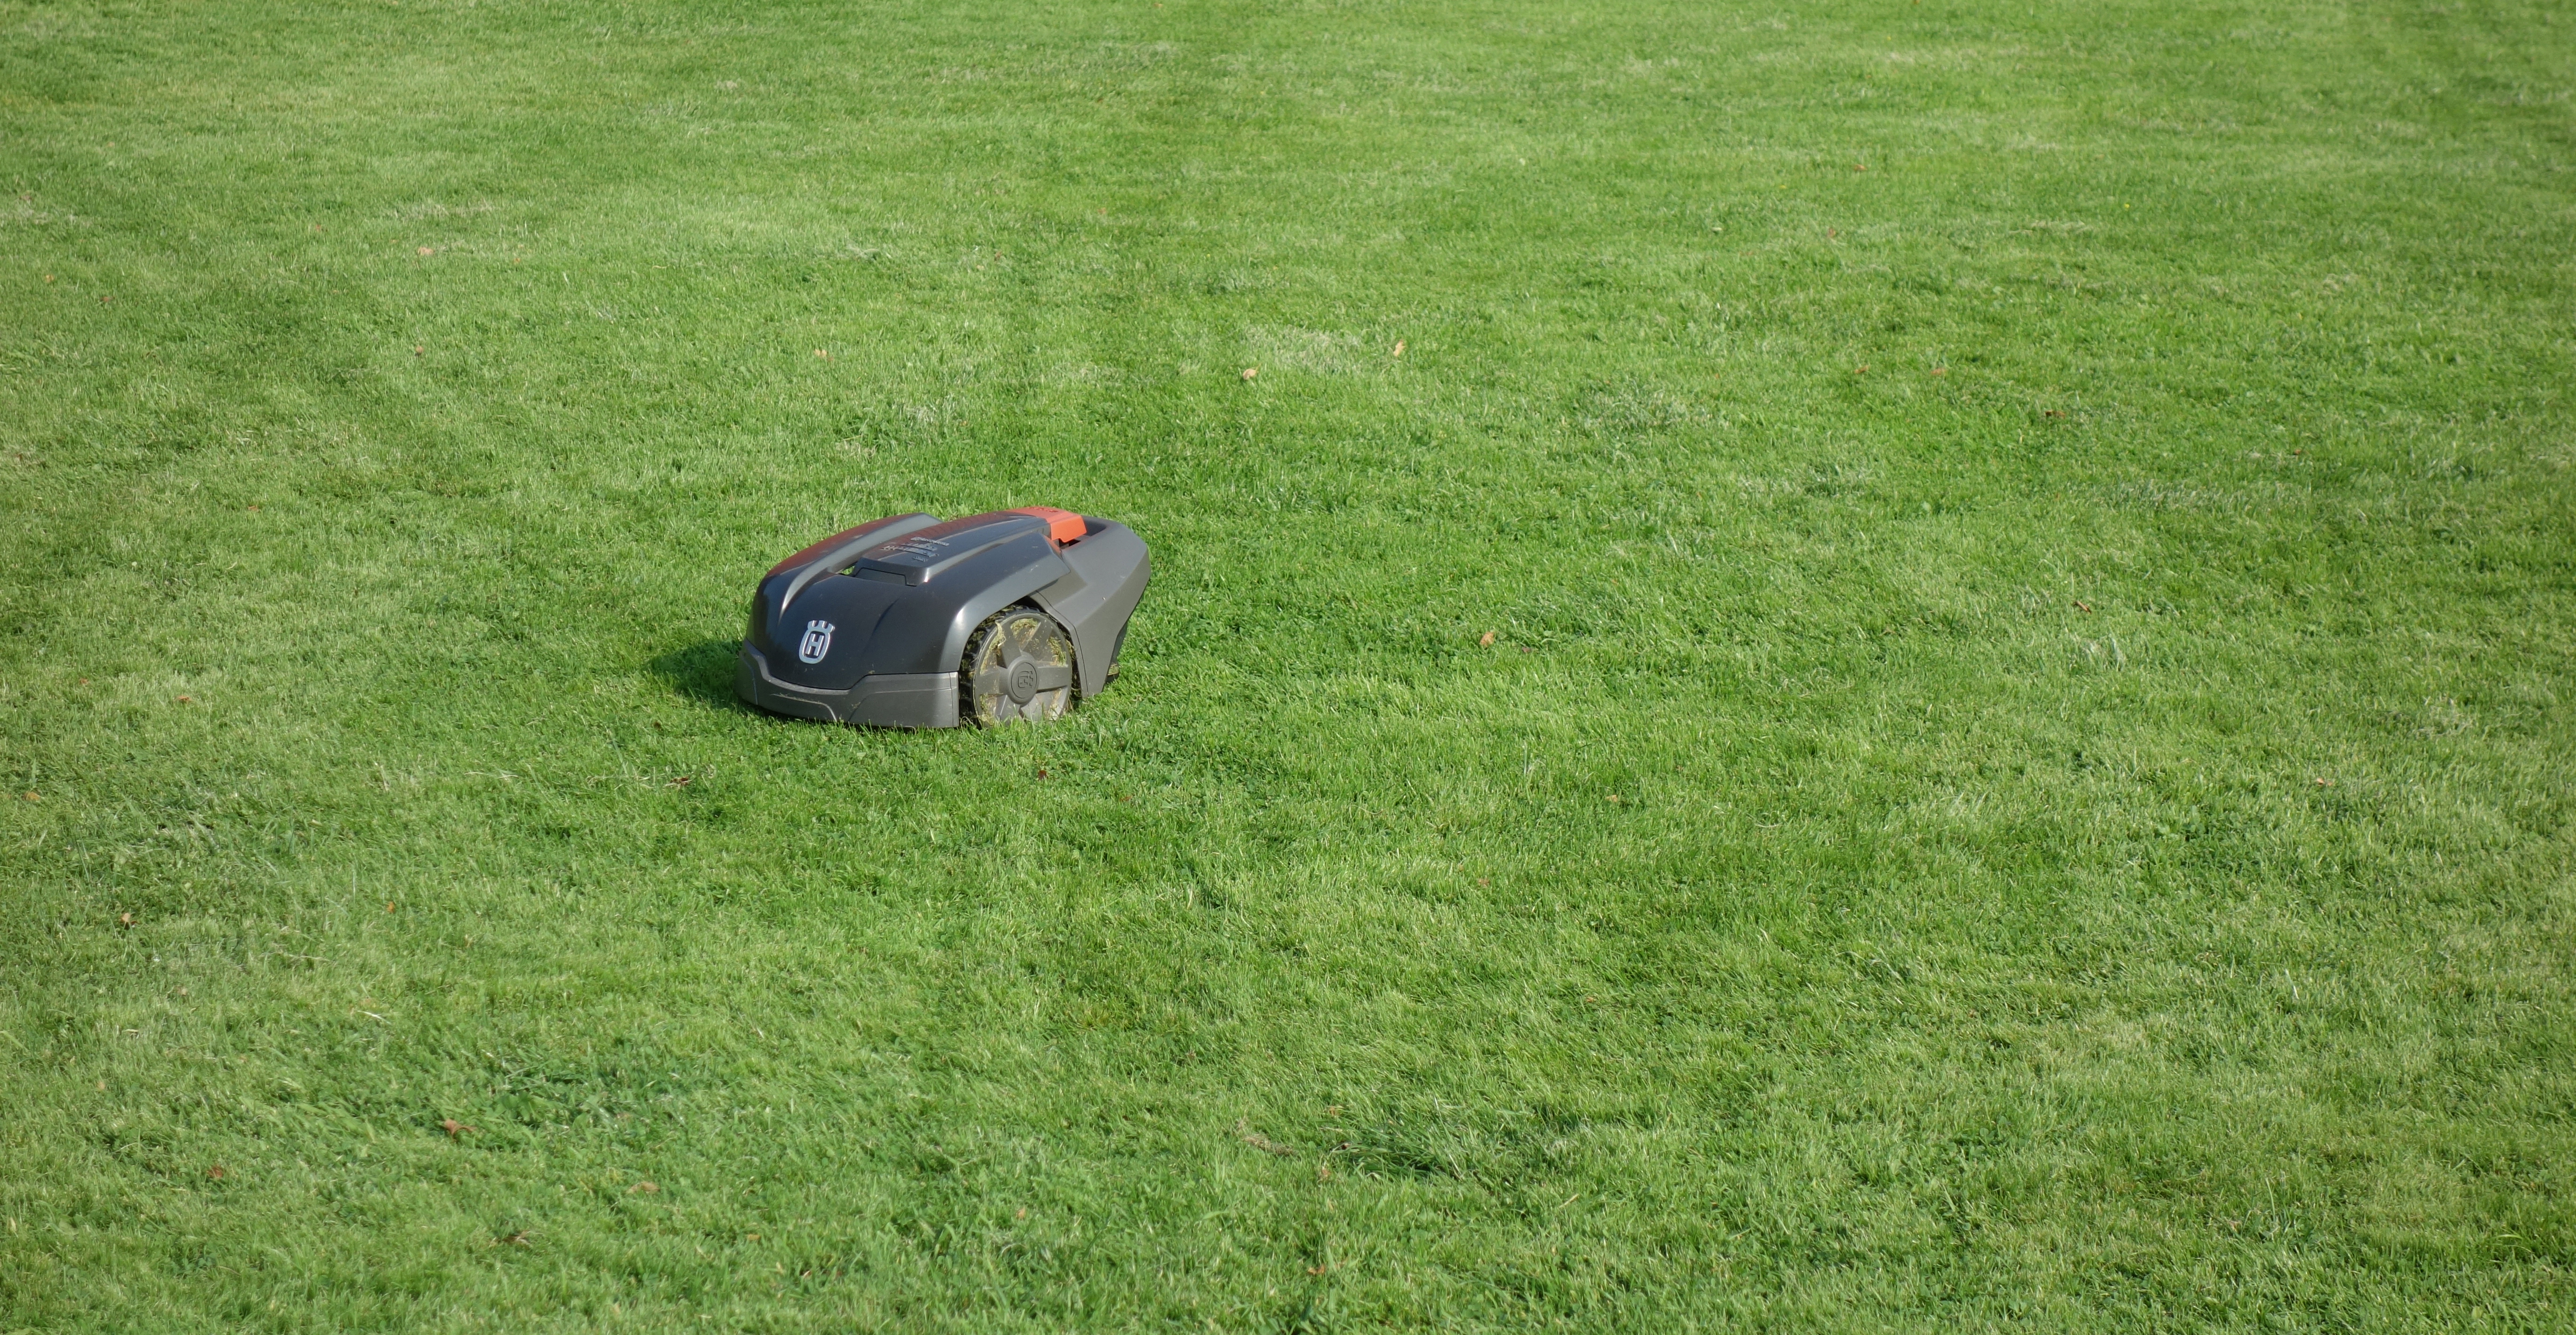 Robotic lawn mower - Wikipedia